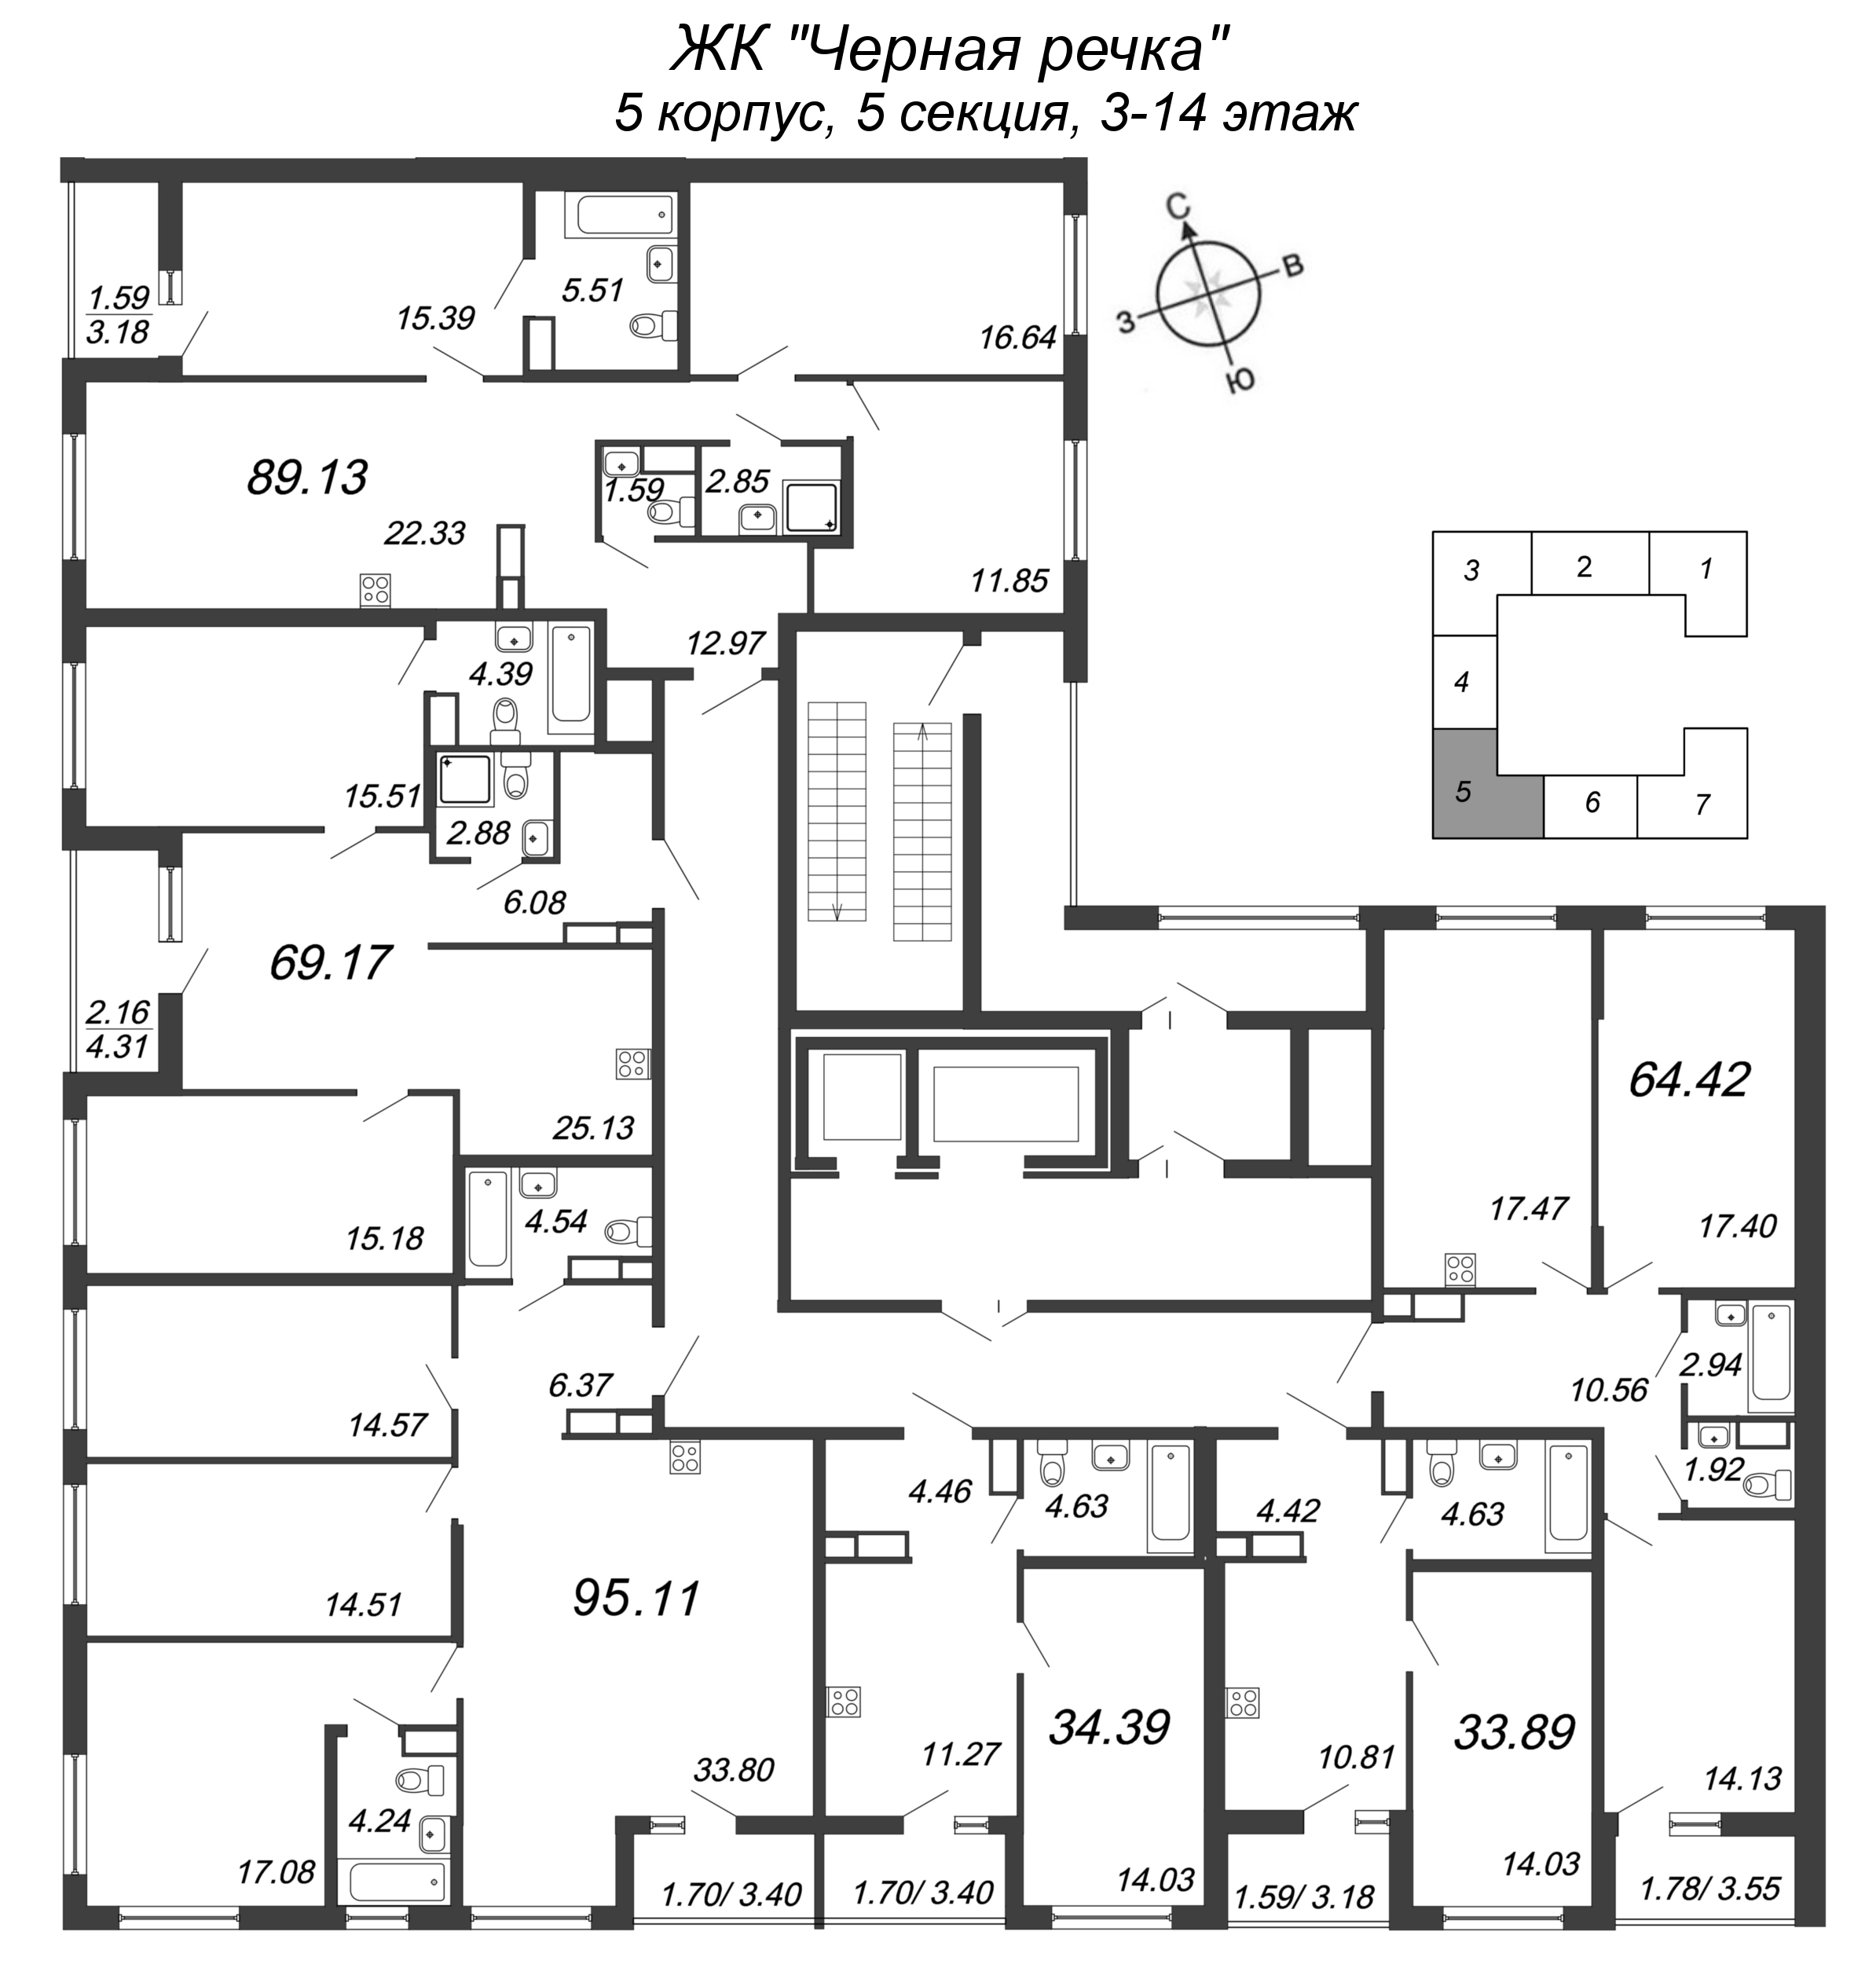 1-комнатная квартира, 34.39 м² в ЖК "Чёрная речка от Ильича" - планировка этажа